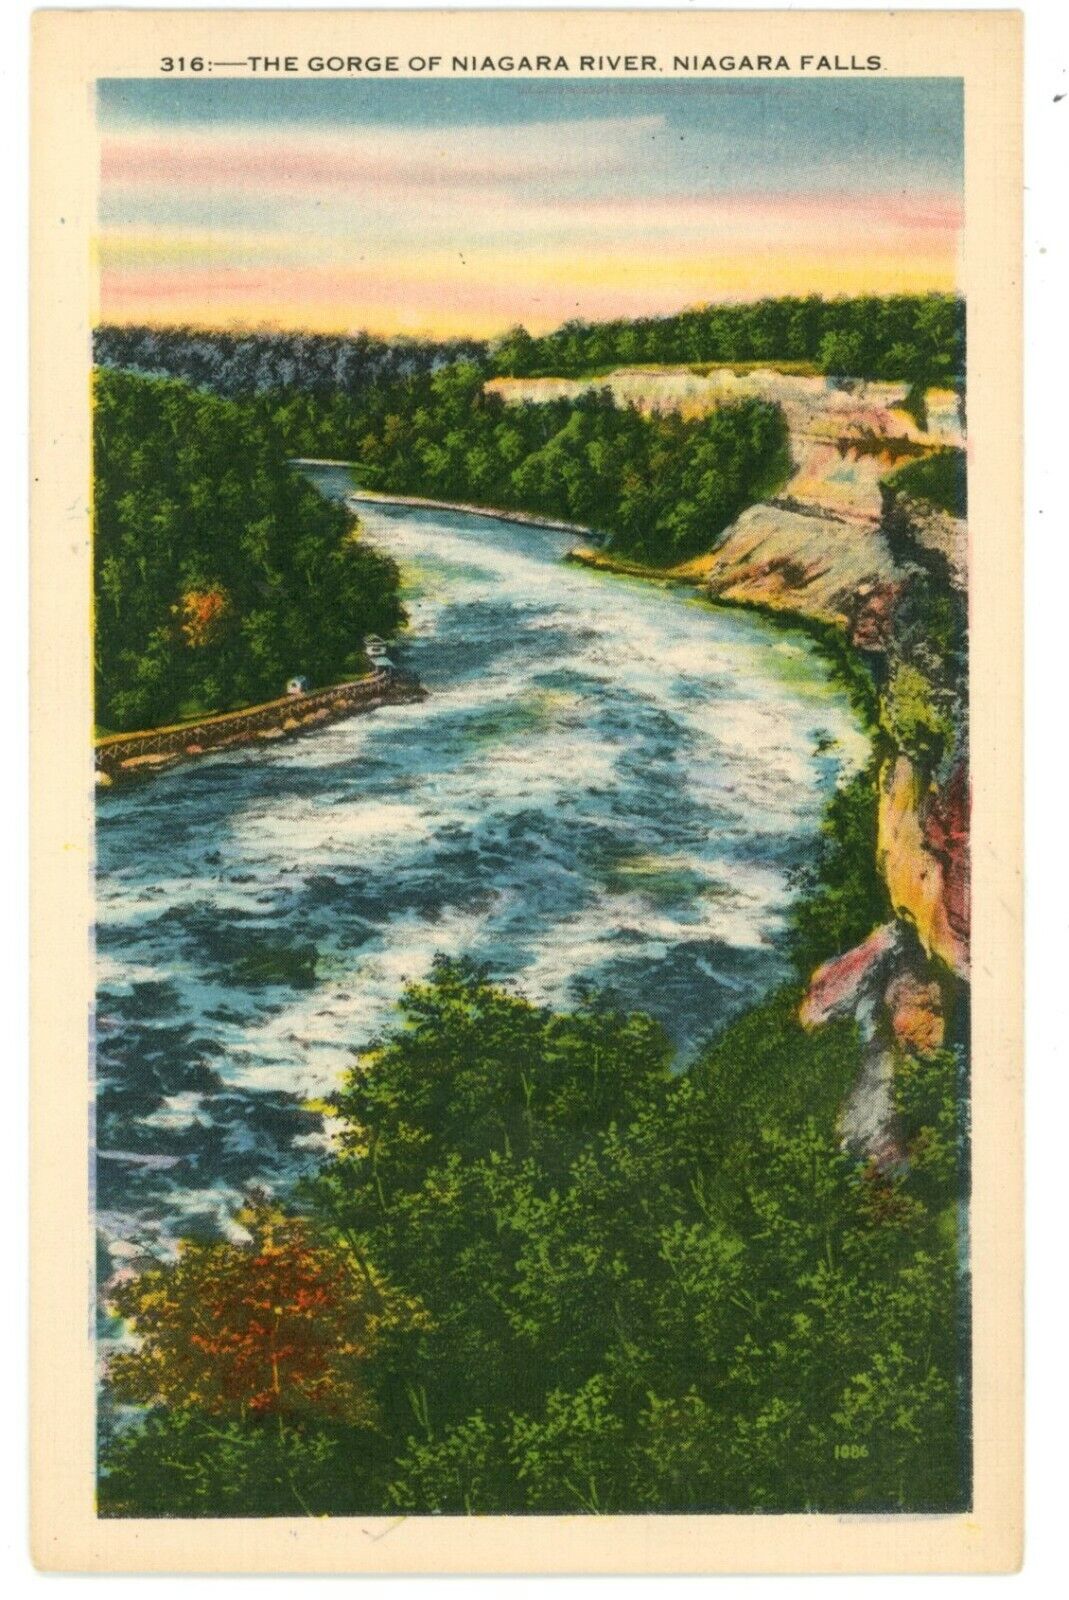 The Great Gorge Of The Niagara River, 7miles At Niagara Falls, New York Postcard